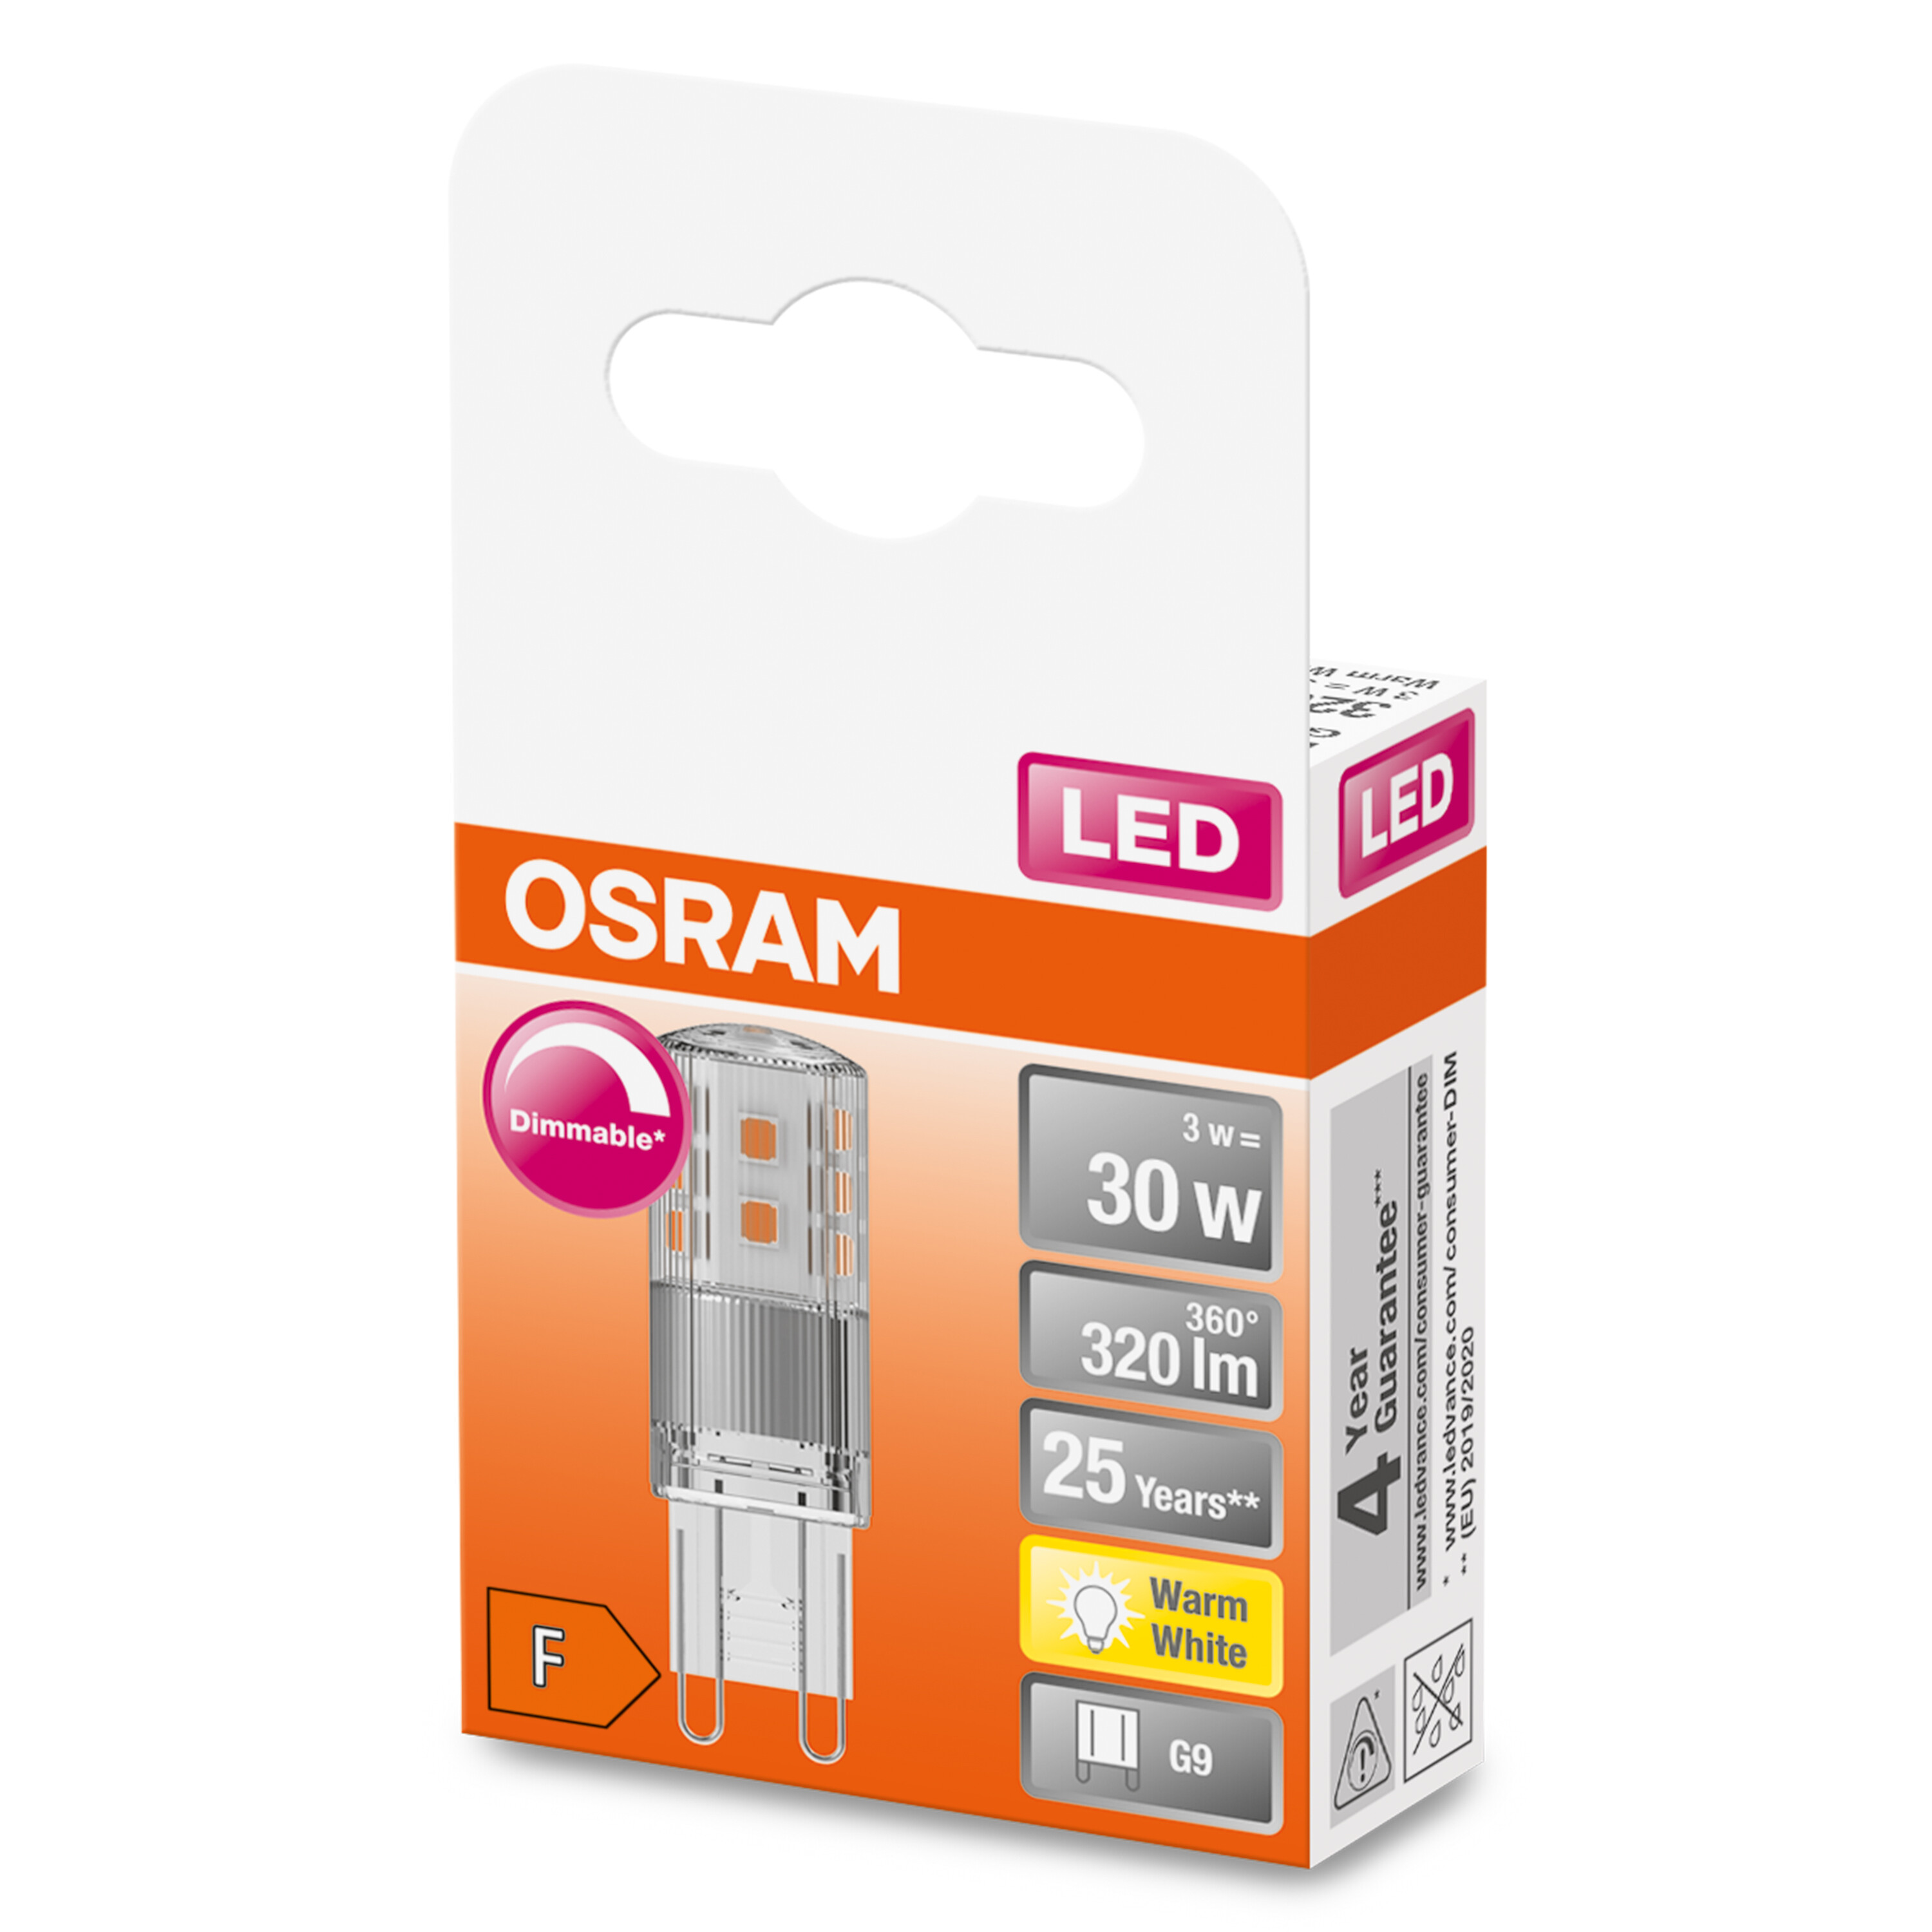 OSRAM  LED PIN G9 DIM 320 LED Lampe Warmweiß lumen